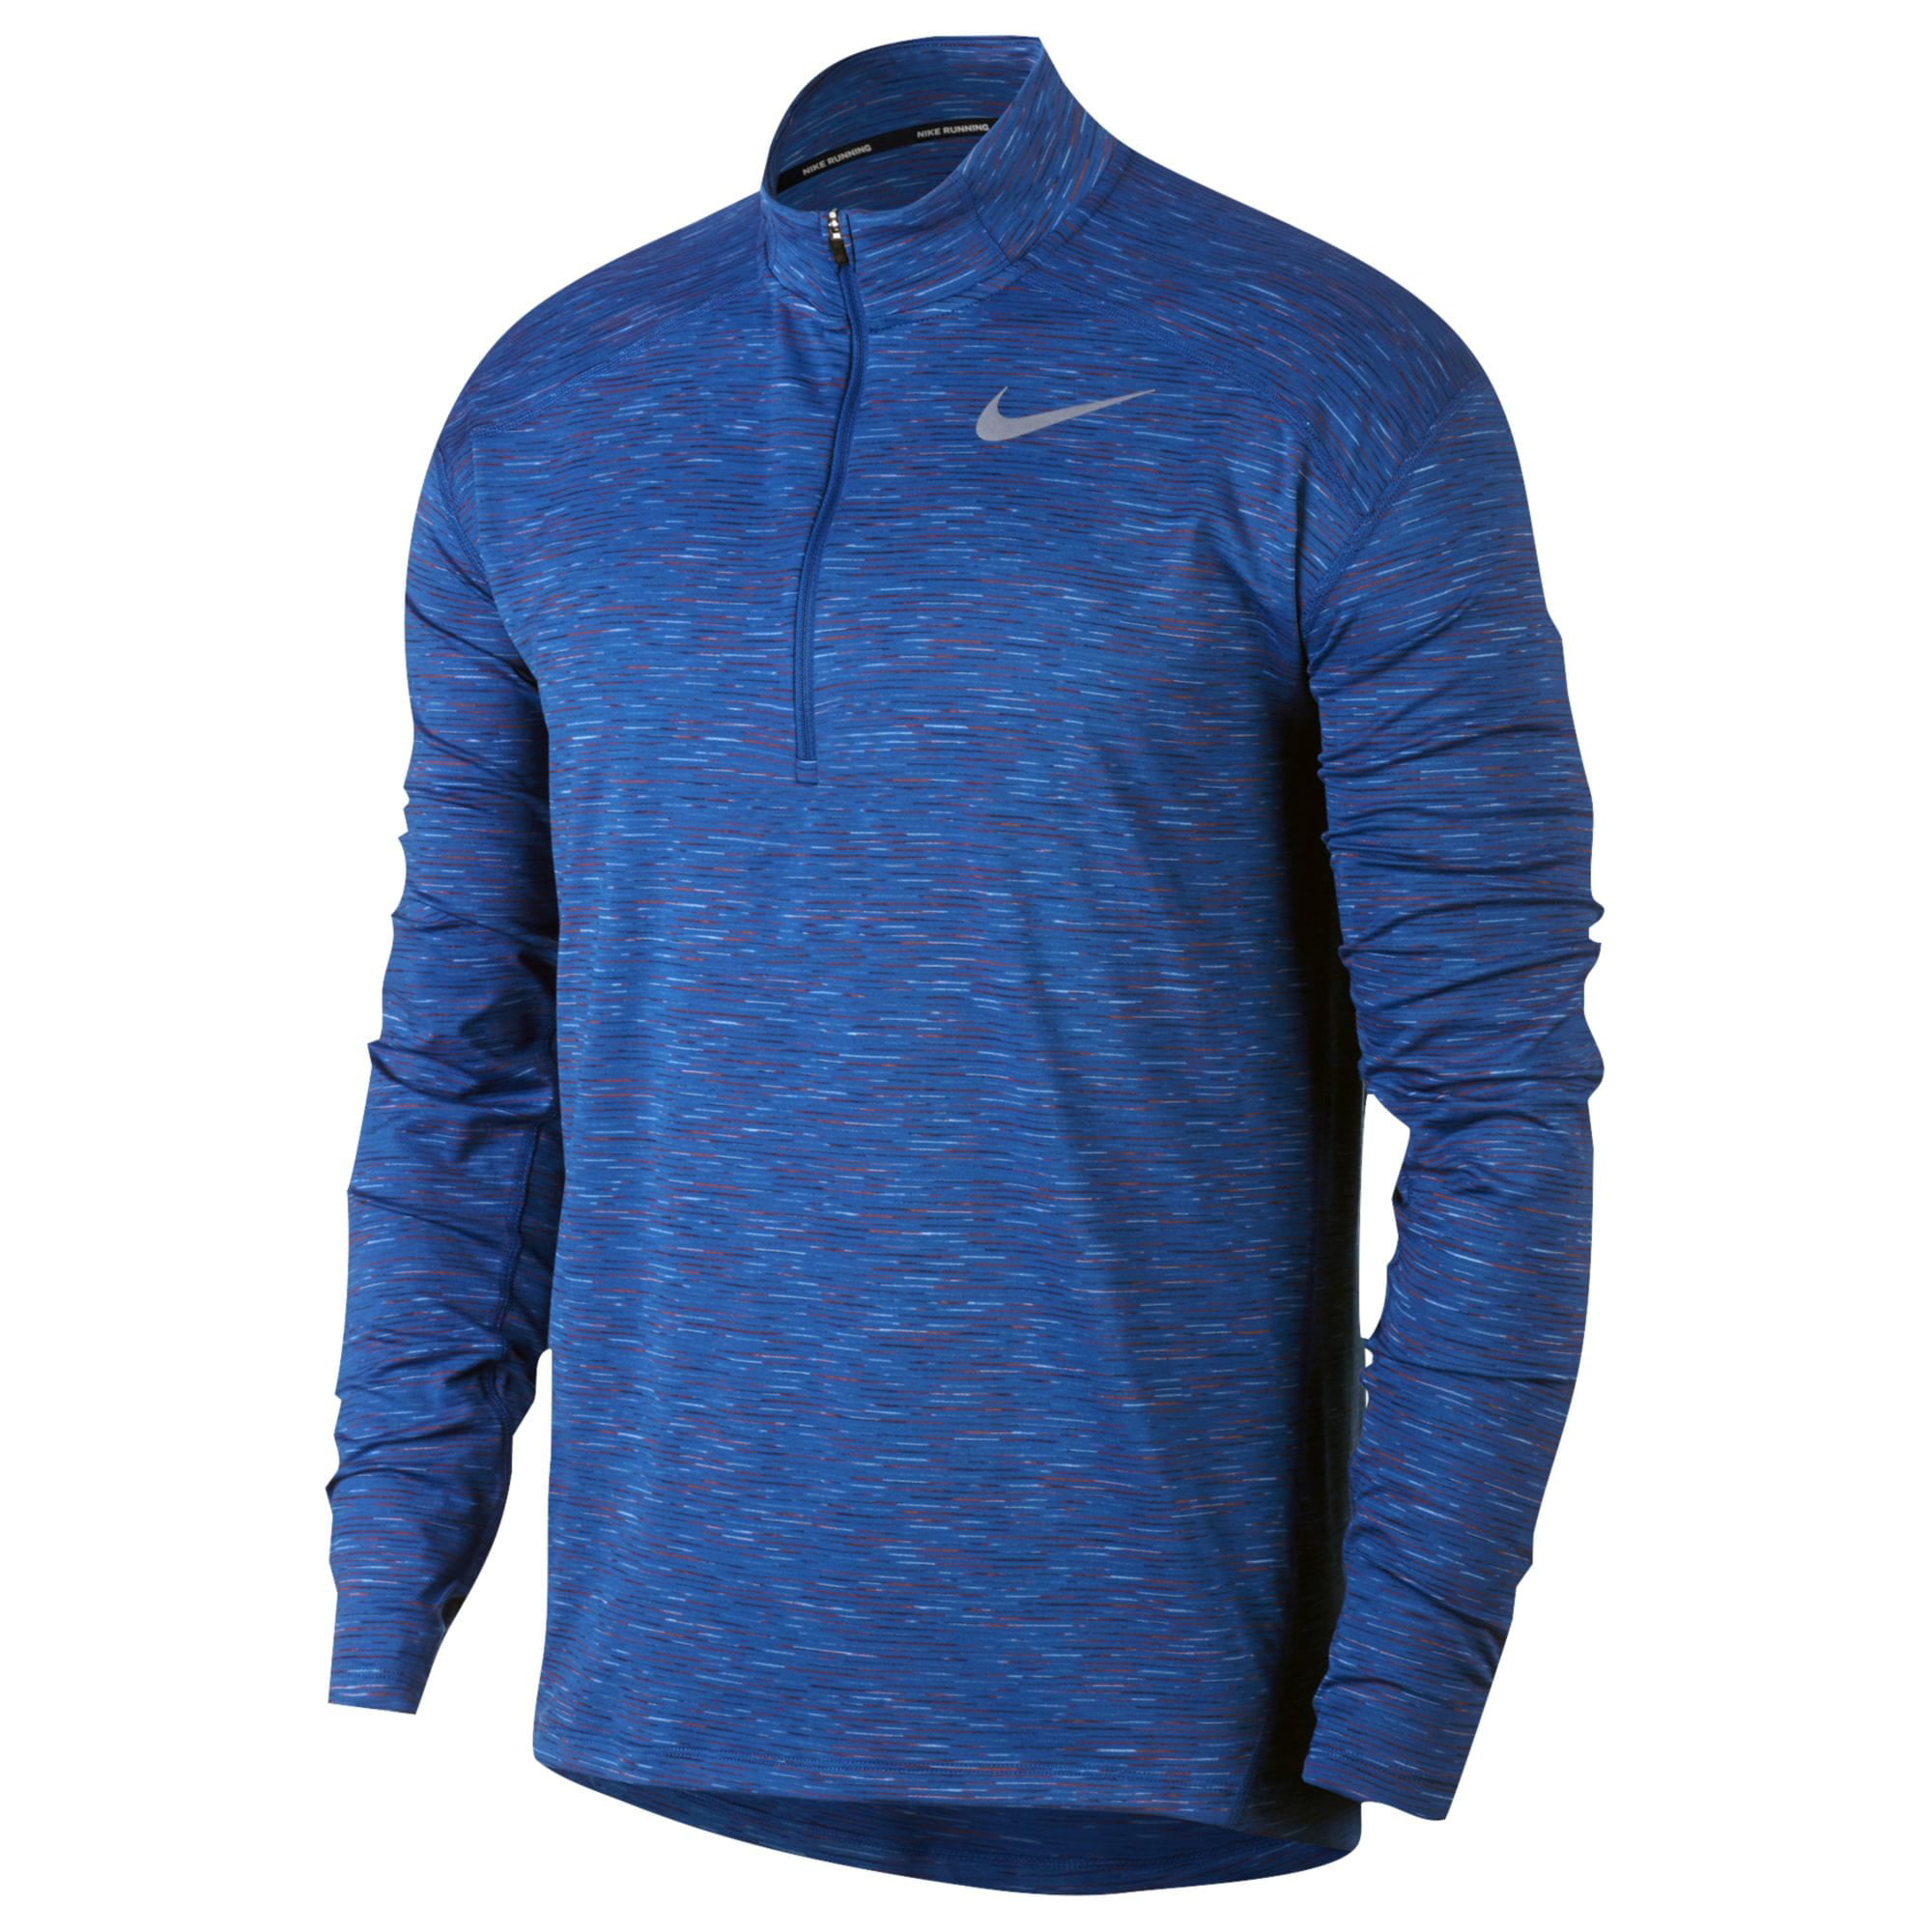 Nike Men's Dri-FIT Element 1/2 Zip Shirts, Medium, Slim Fit - Walmart.com